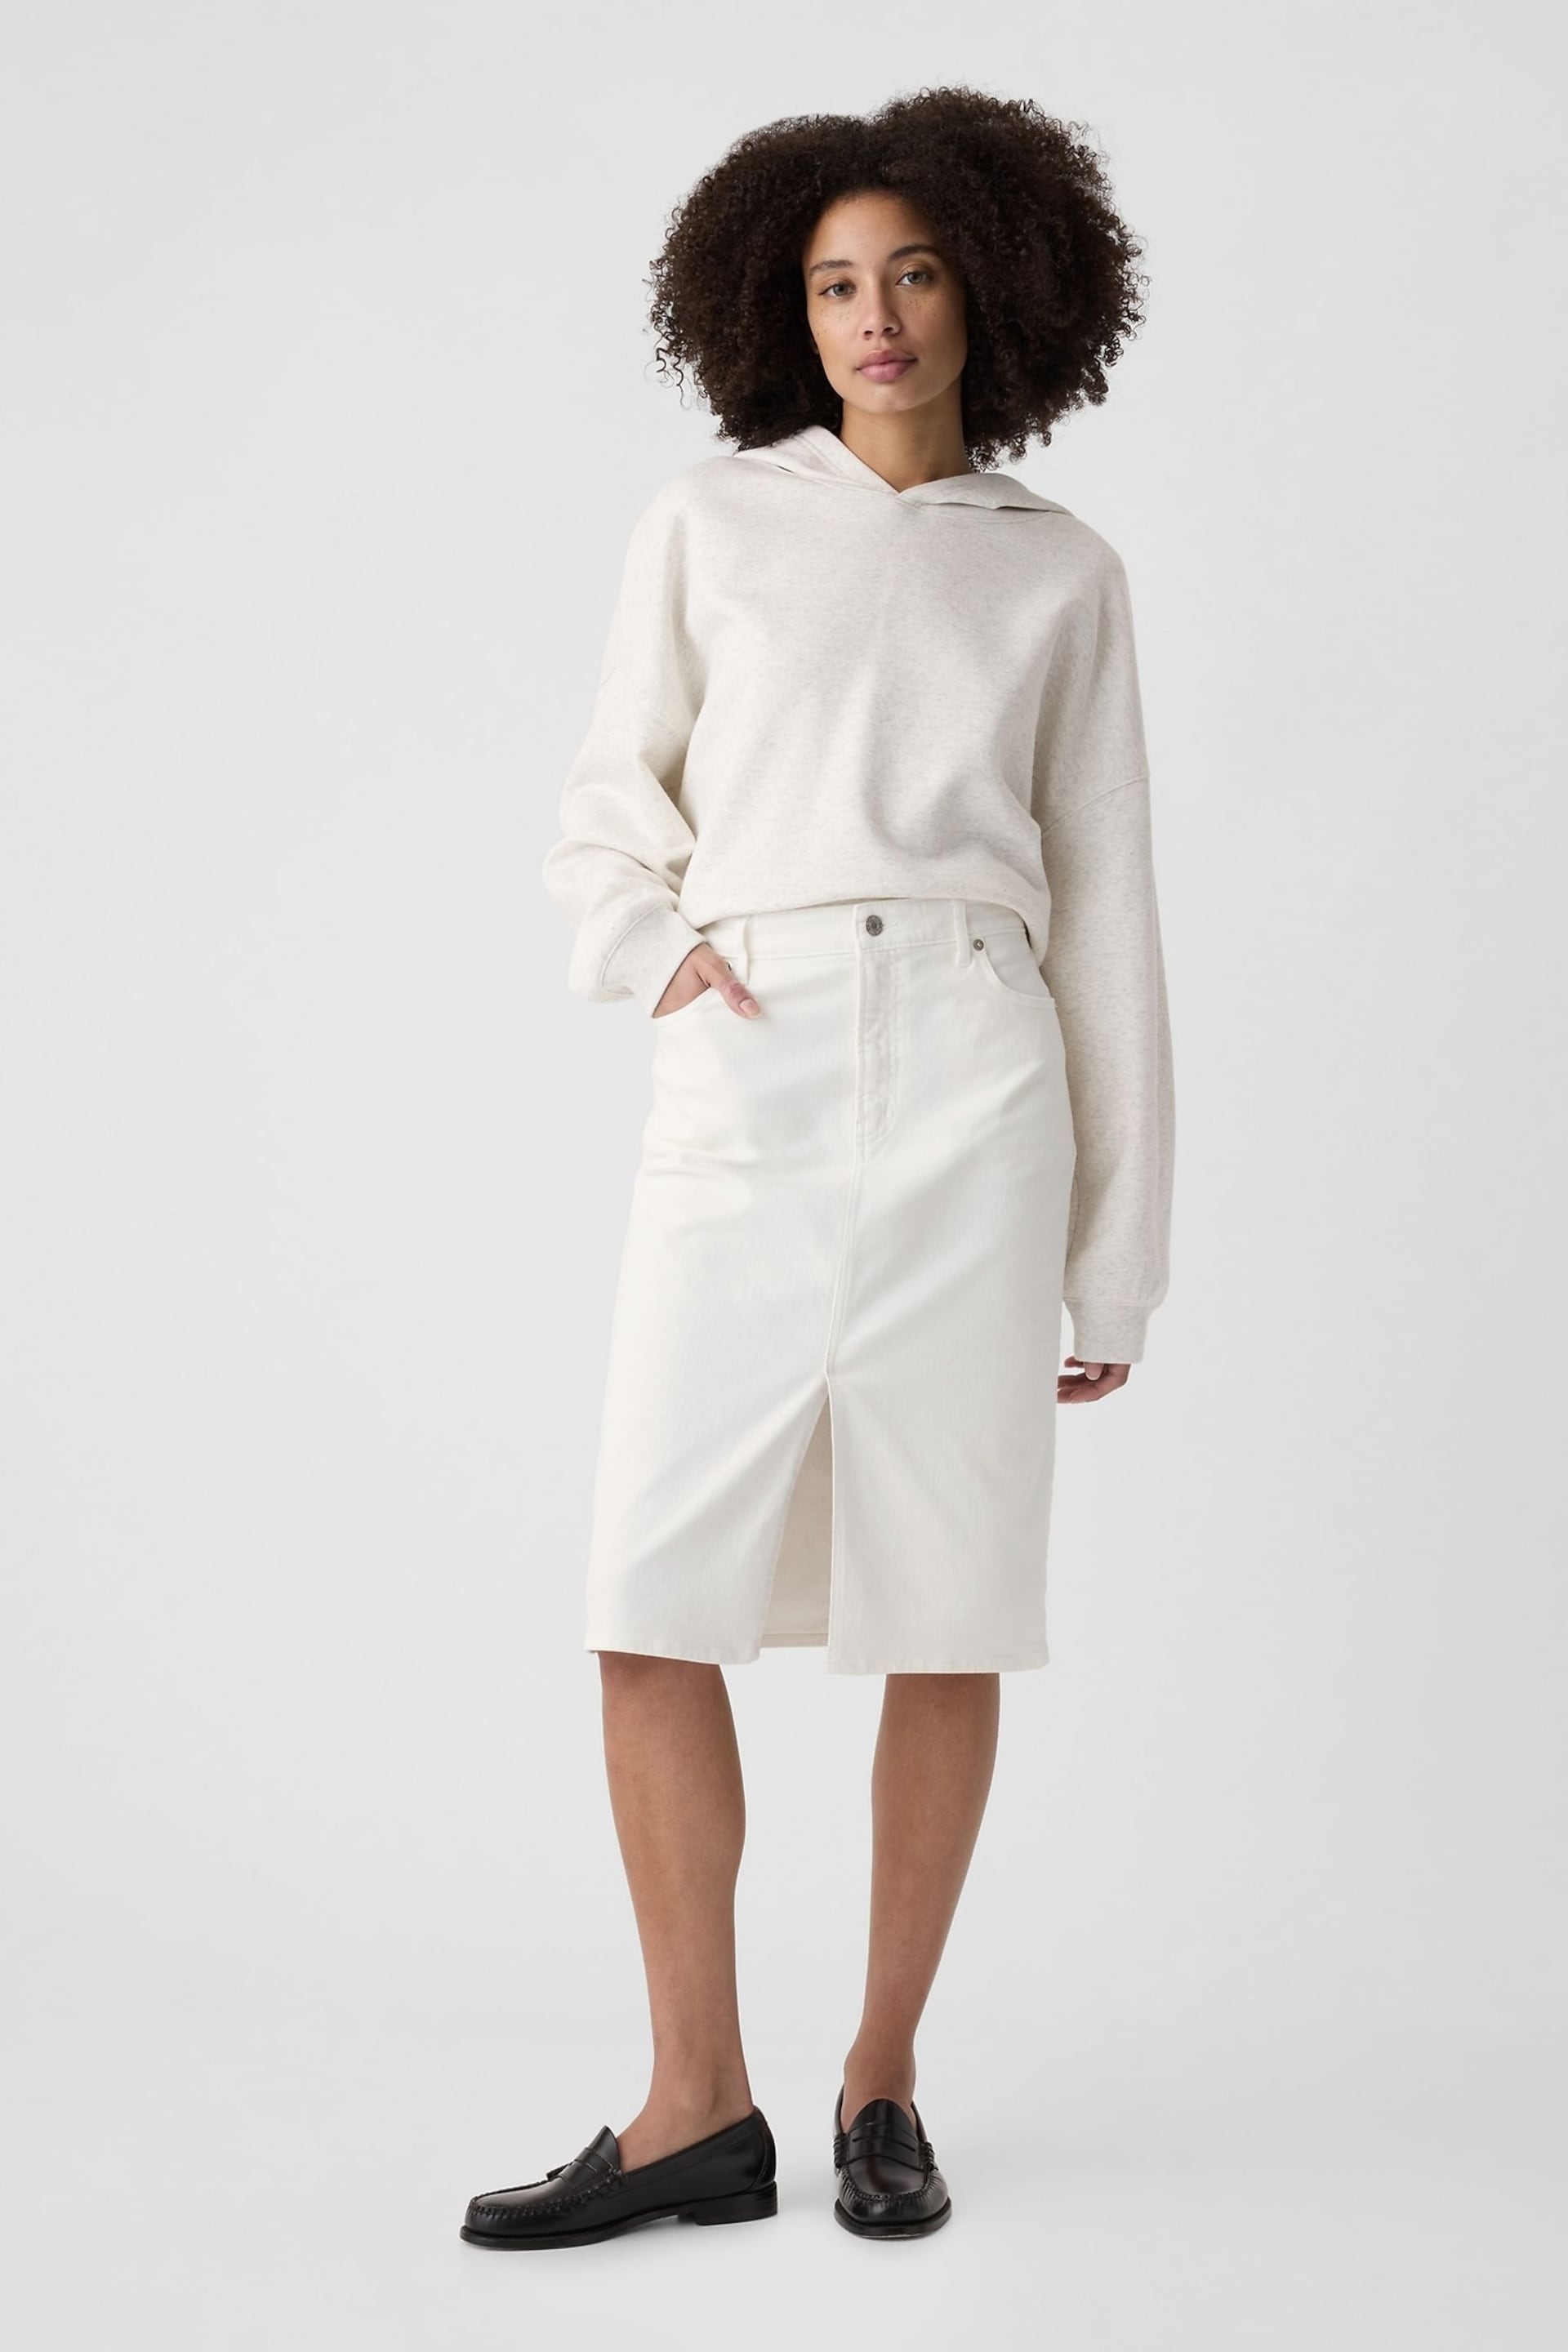 Gap White Denim Midi Skirt - Image 1 of 5